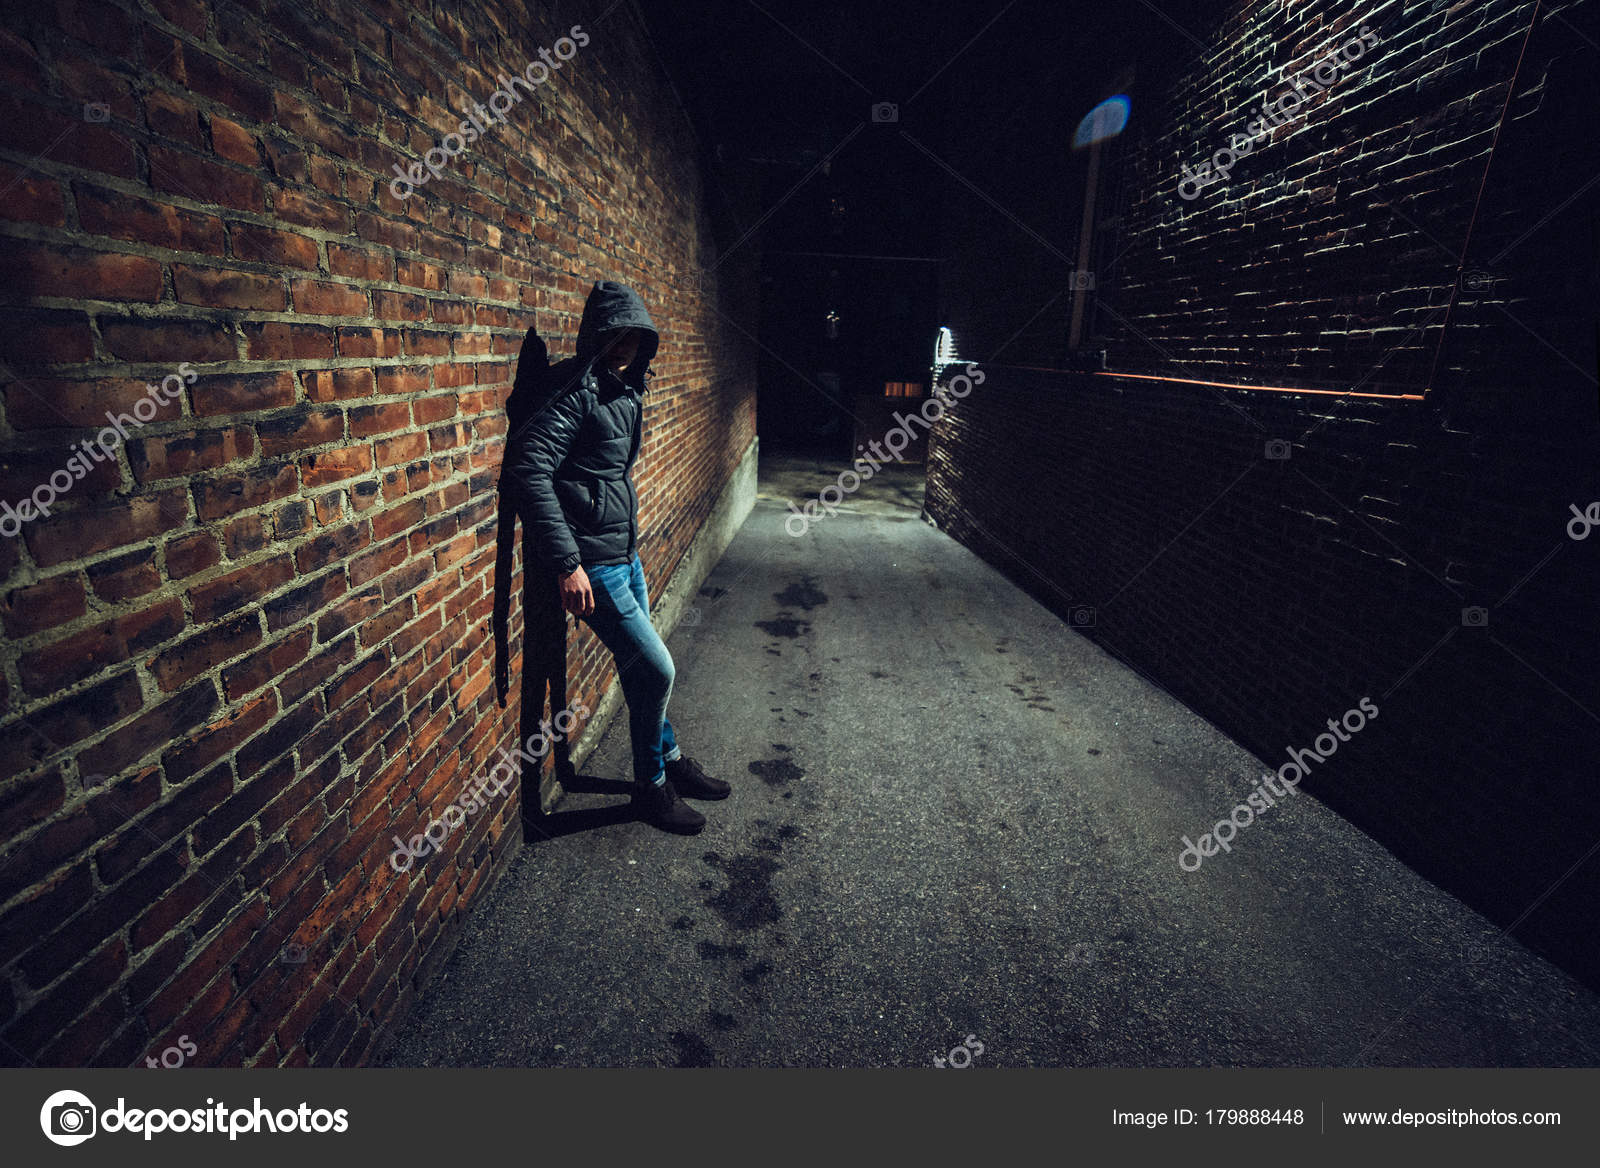 depositphotos_179888448-stock-photo-suspicious-man-dark-alley-waiting